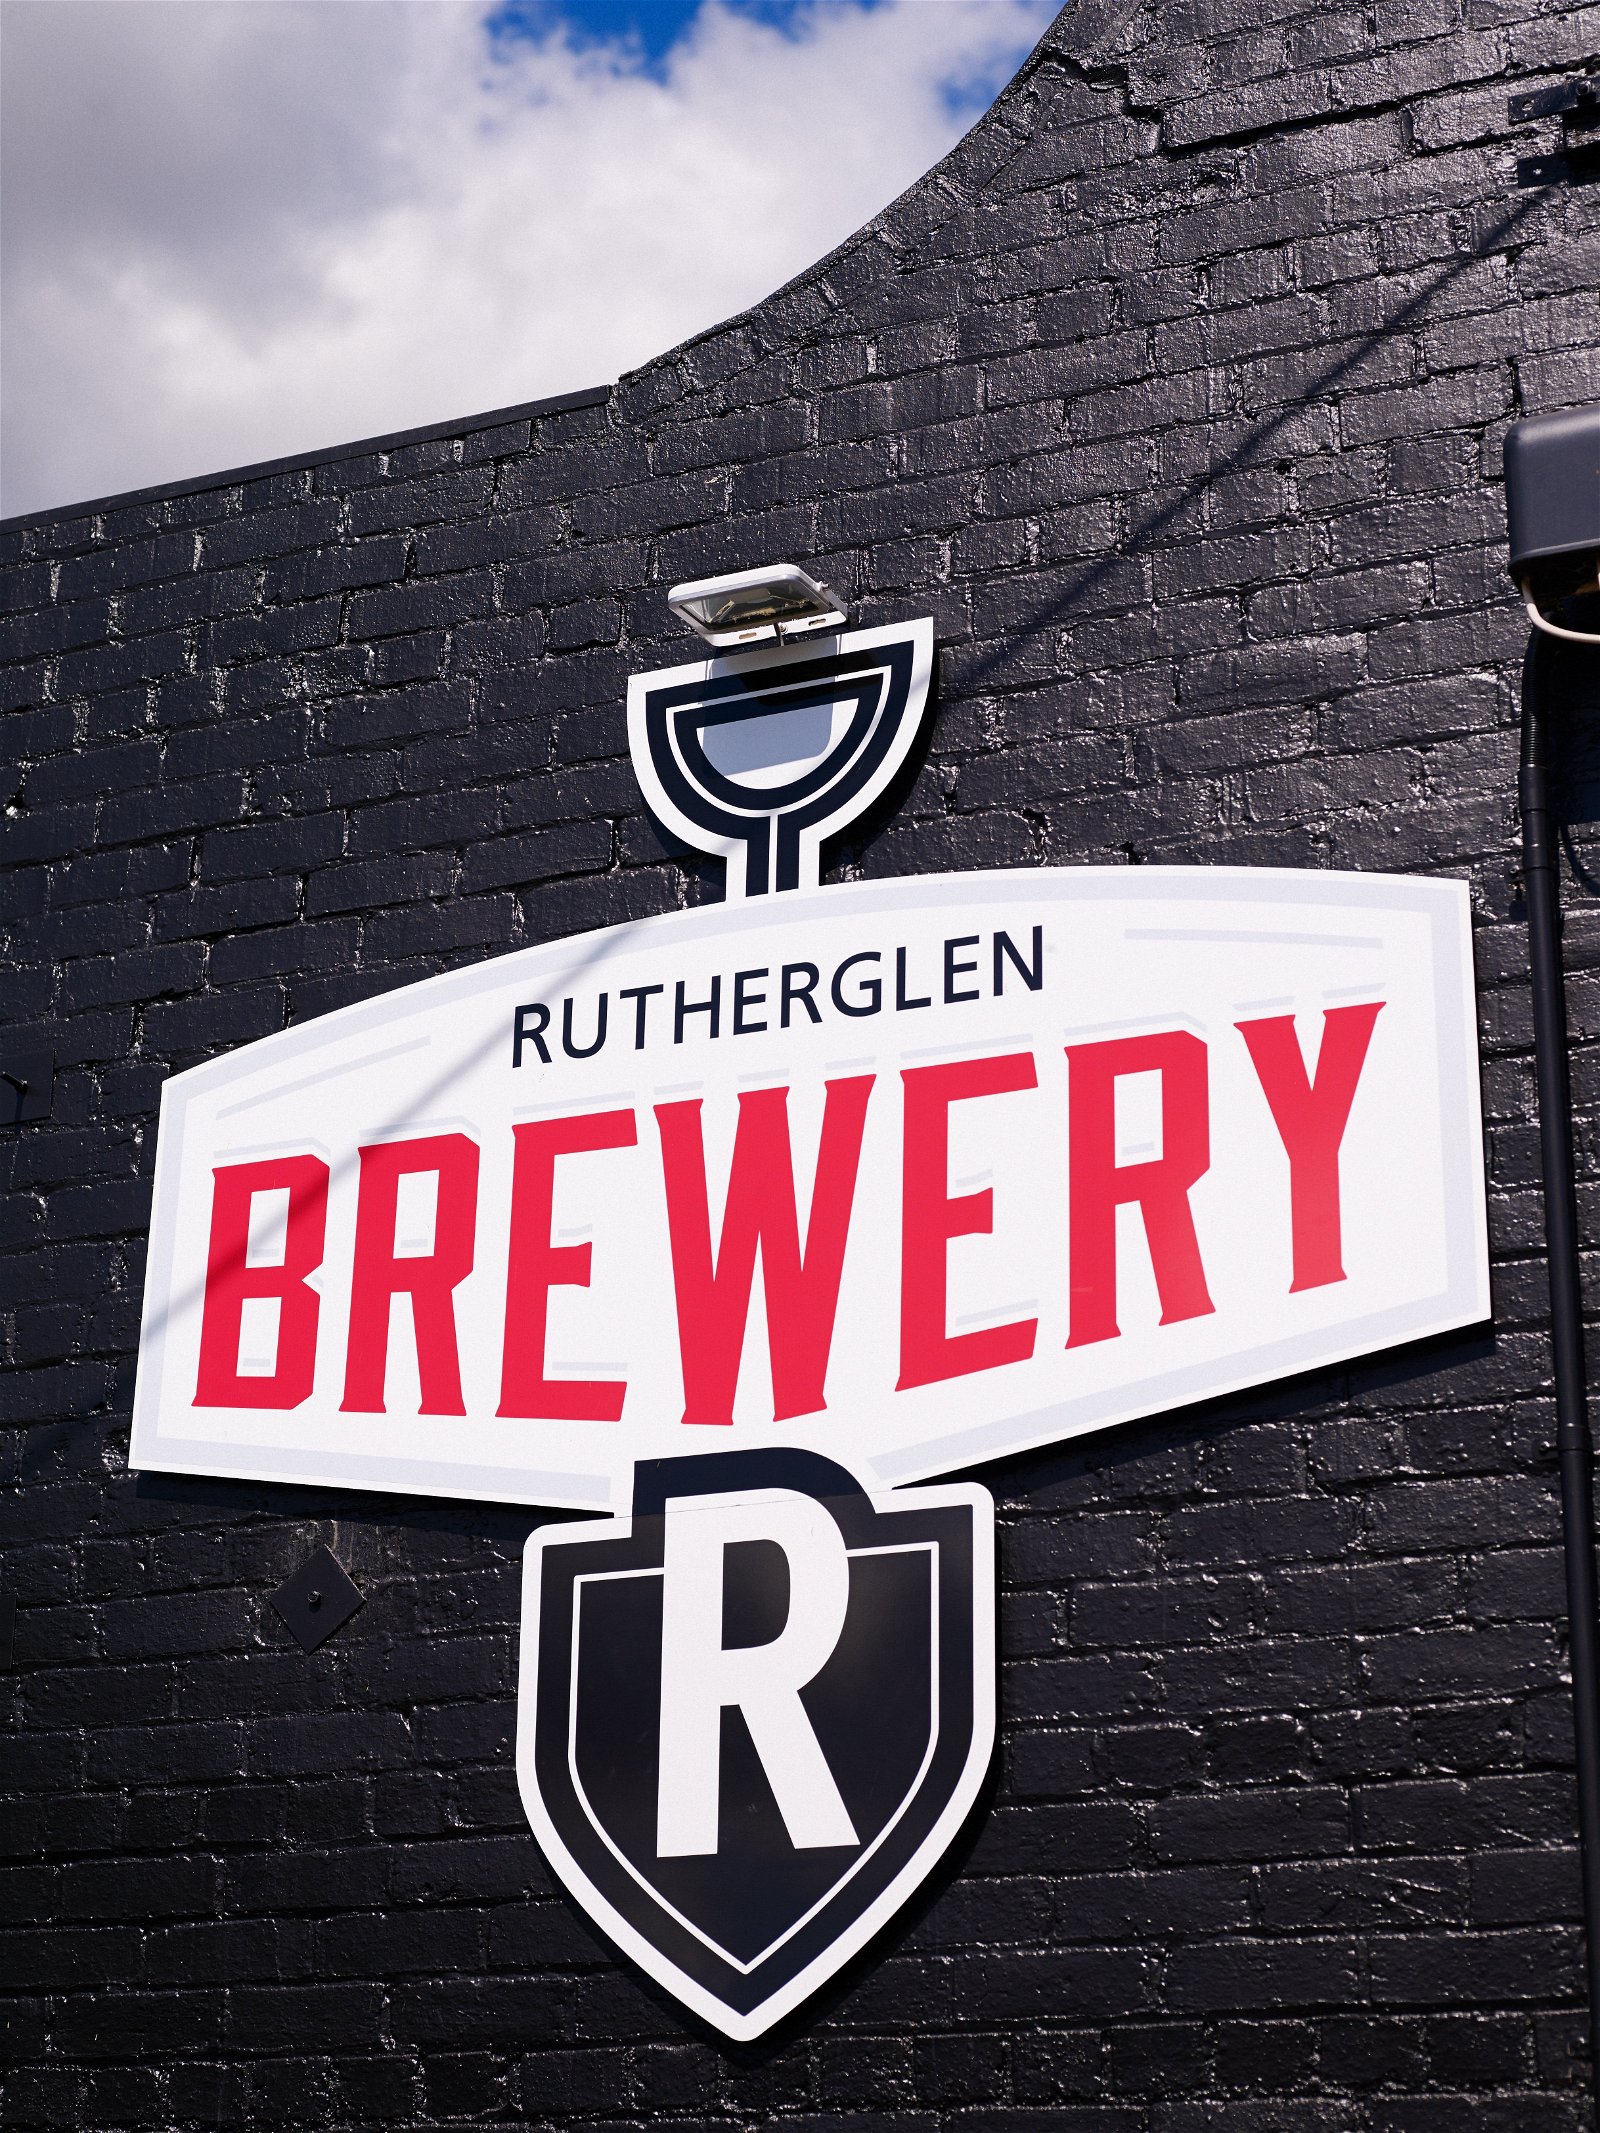 Rutherglen Brewery - thumb 2